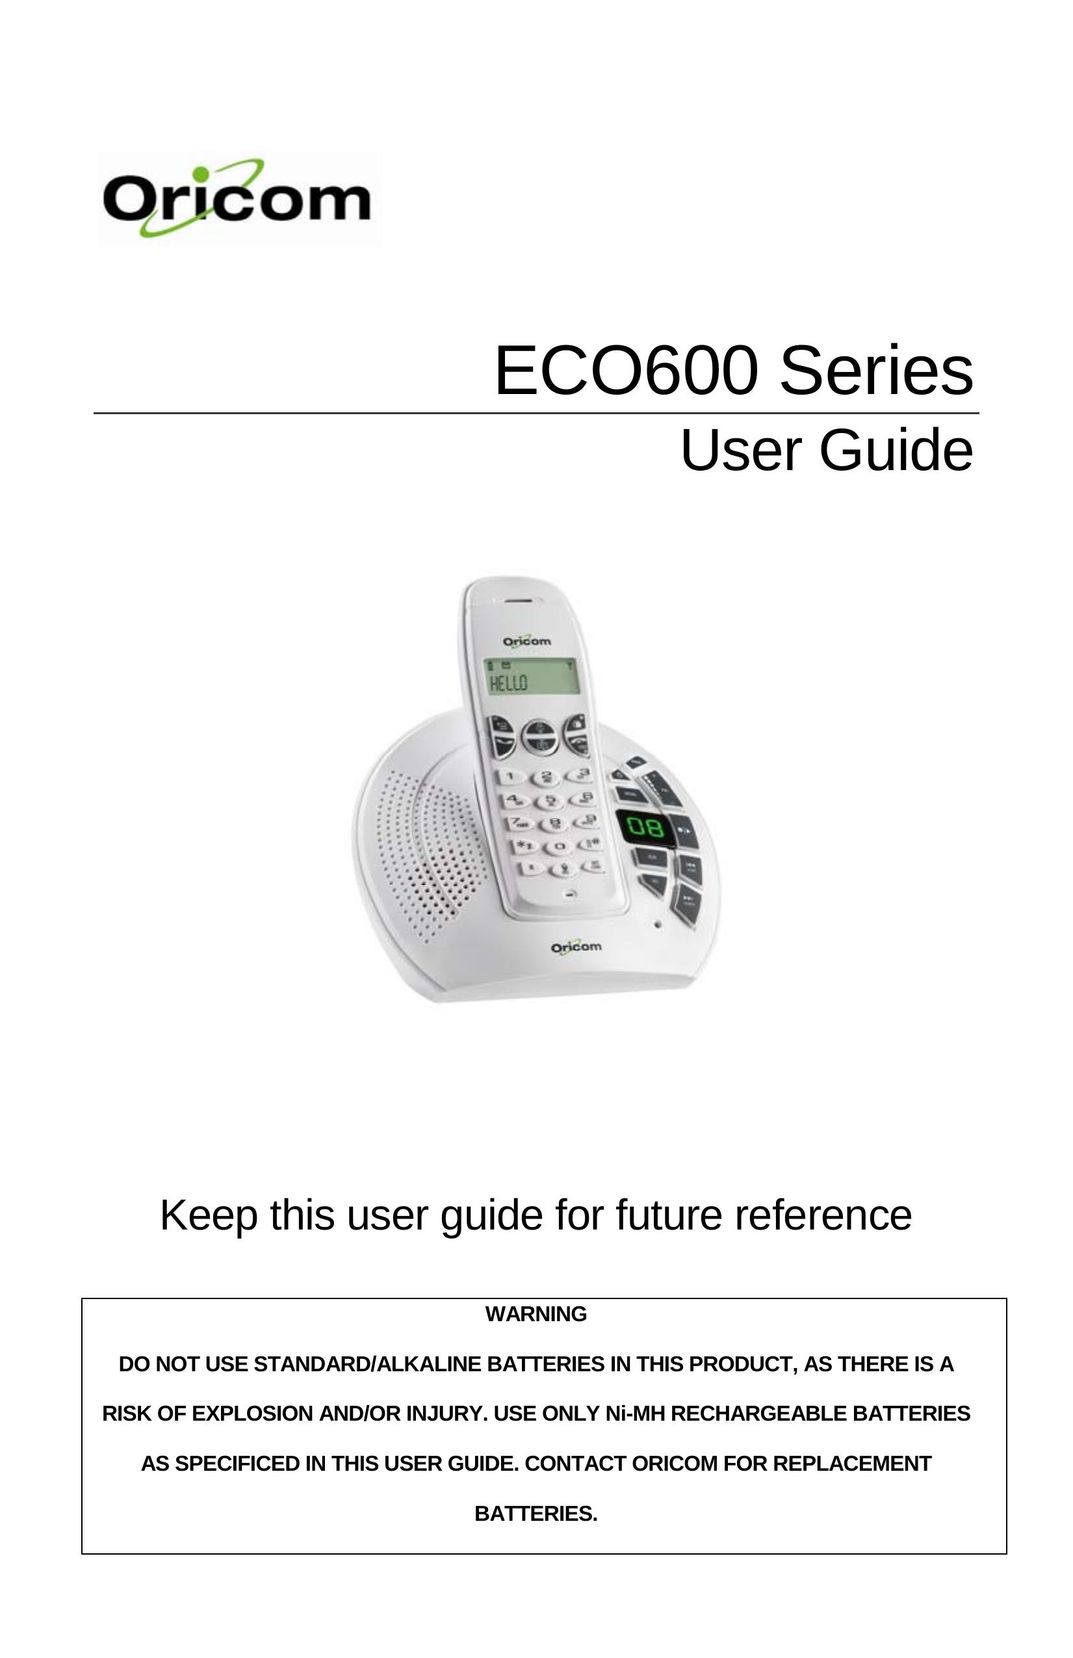 Oricom ECO600 Cordless Telephone User Manual